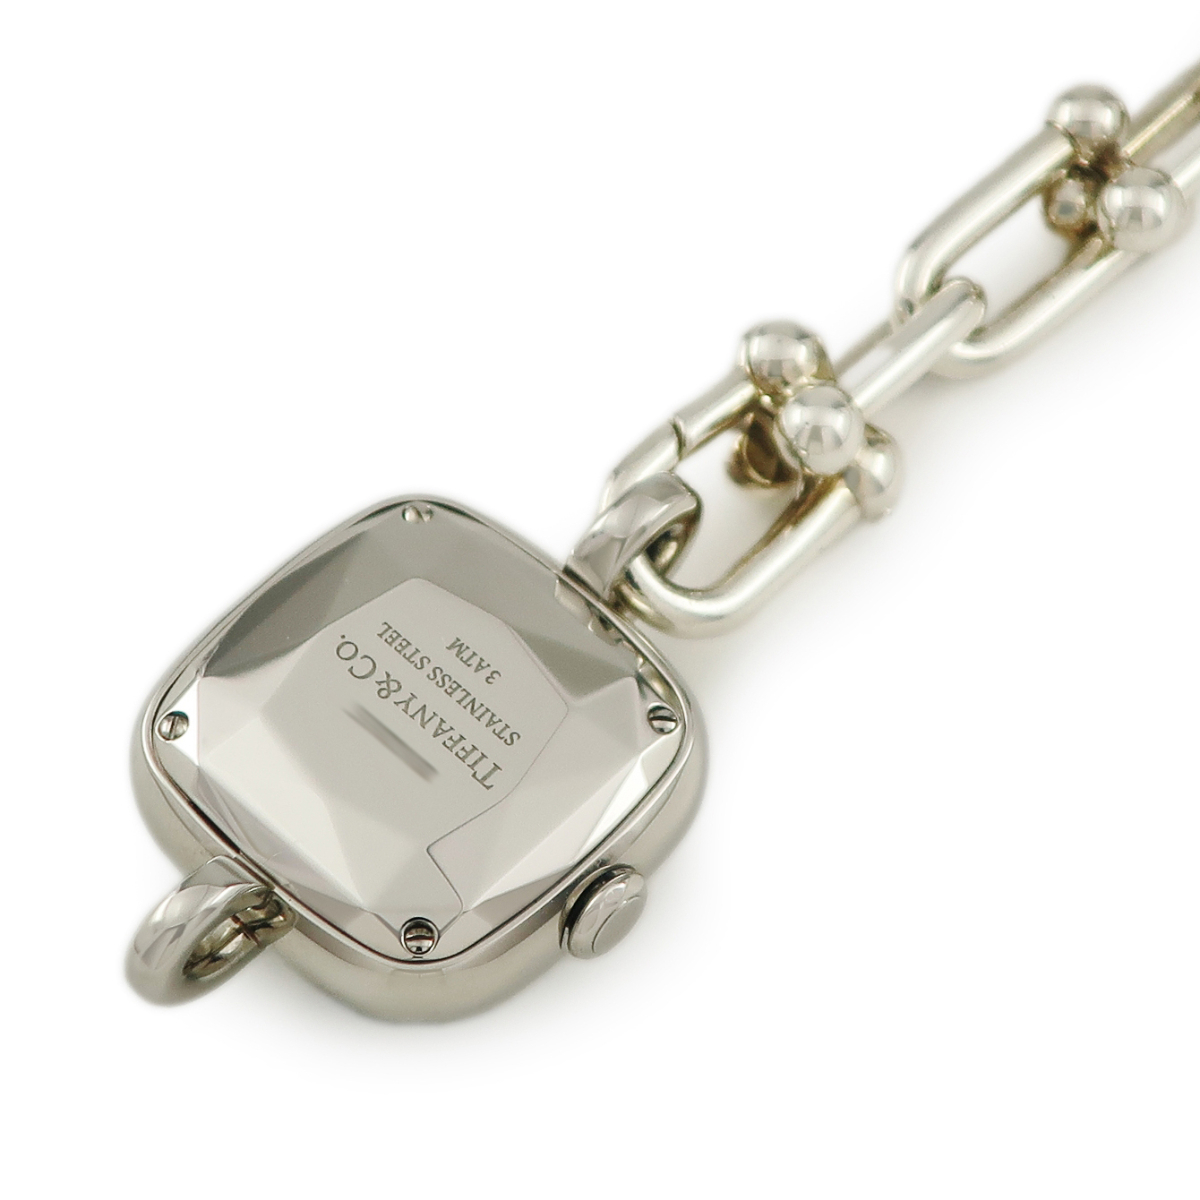 [3 year guarantee ] Tiffany hardware watch medium 73332052 73331269 original 8P diamond light blue square quarts lady's wristwatch 